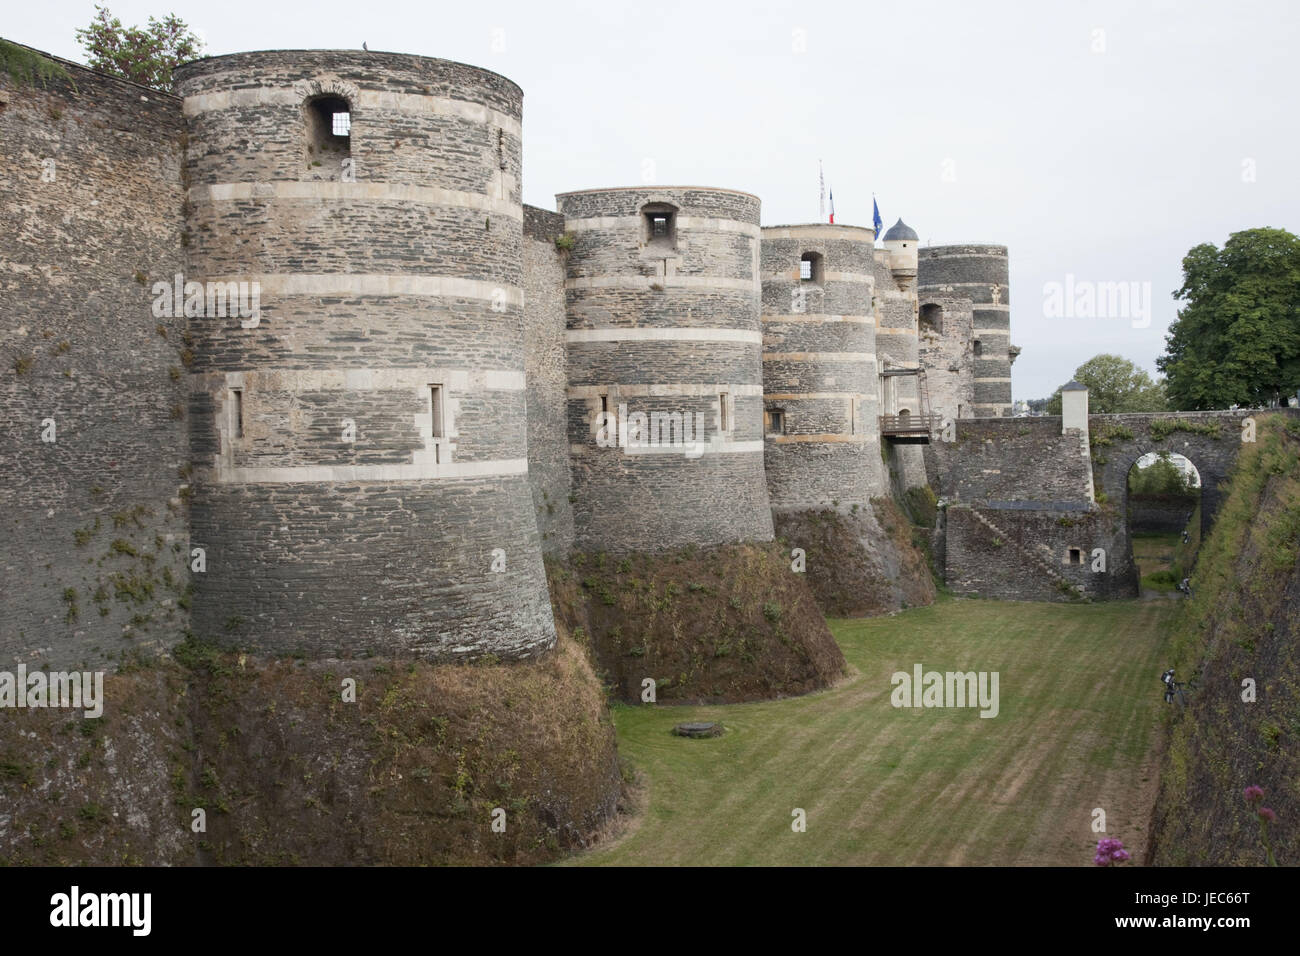 Francia, el valle del Loira, bloqueo en Angers, fuera, torres, murallas, bloqueo Foto de stock